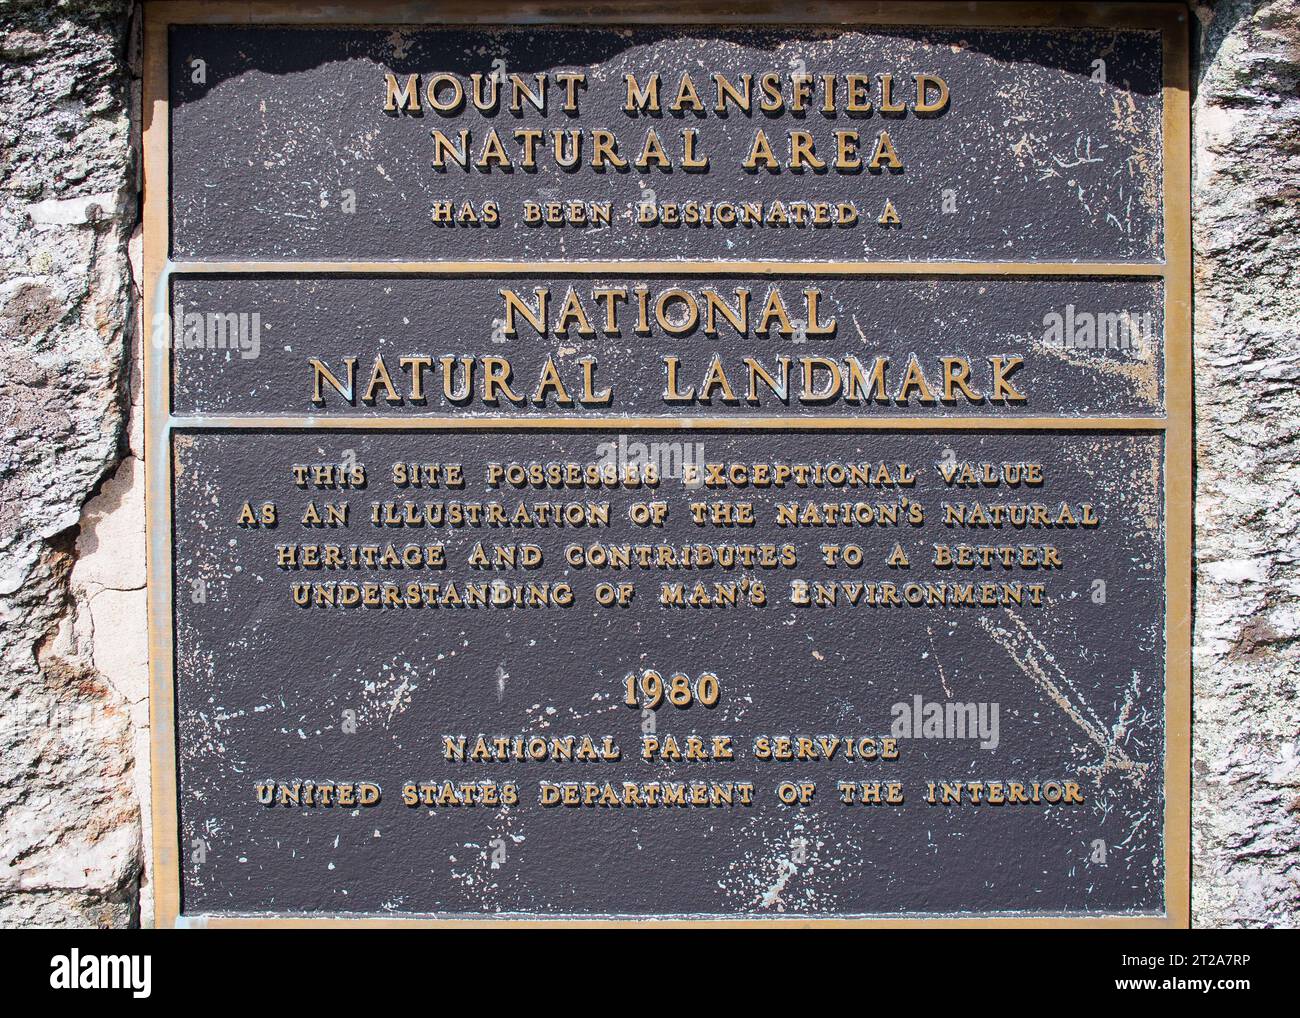 Vermont, USA - 28. September 2016: Mount Mansfield Natural Area Schild: A Natural Landmark in Vermont, USA. Stockfoto